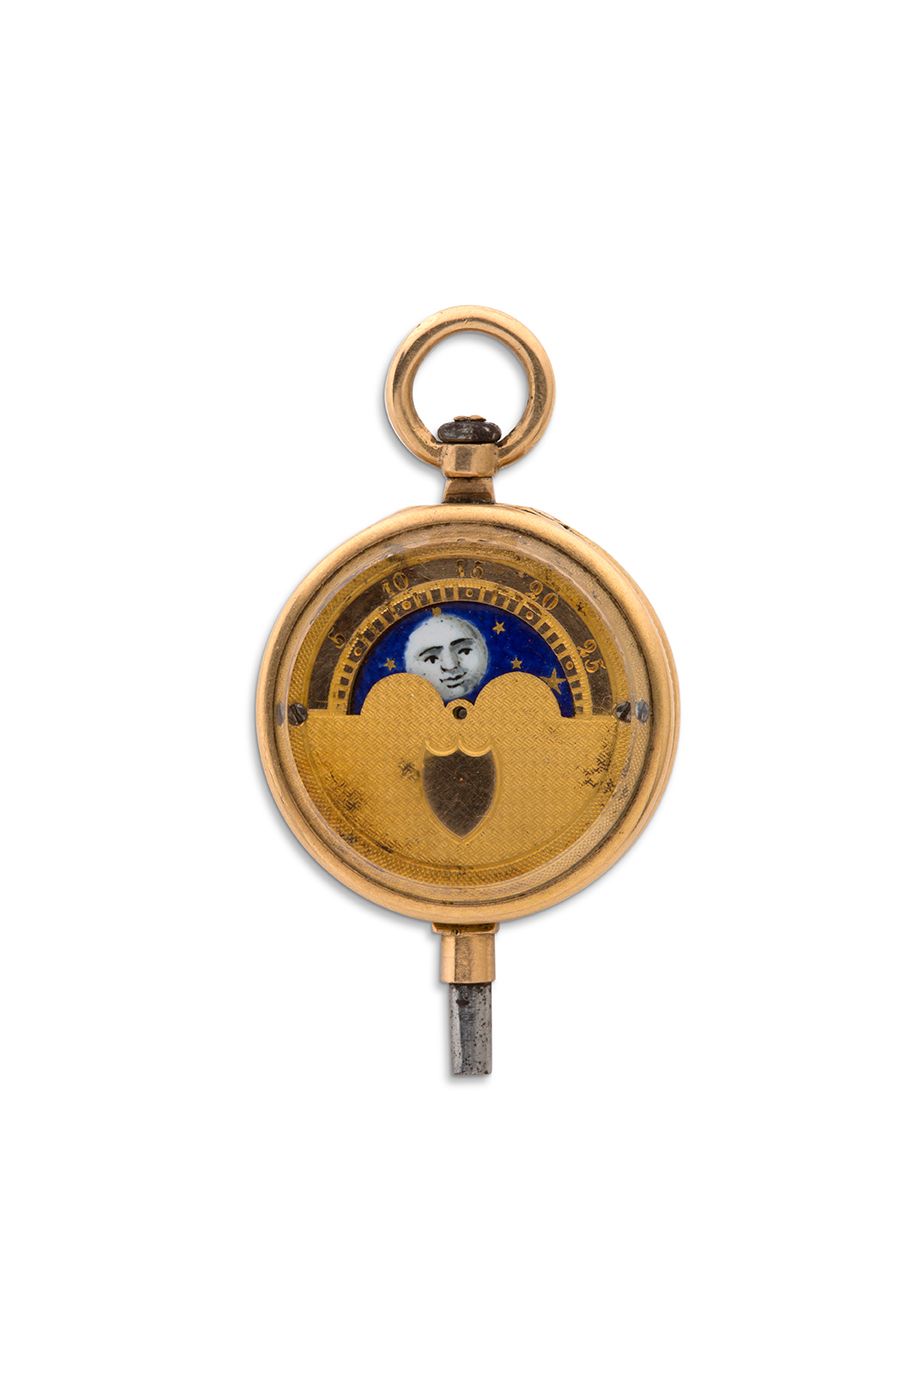 ETIENNE TAVERNIER 
"神奇的钥匙"



带半自动日历的金表钥匙



圆形表壳，双面，一面是珐琅表盘上的双日期指示，另一面是月相和年龄，对应&hellip;